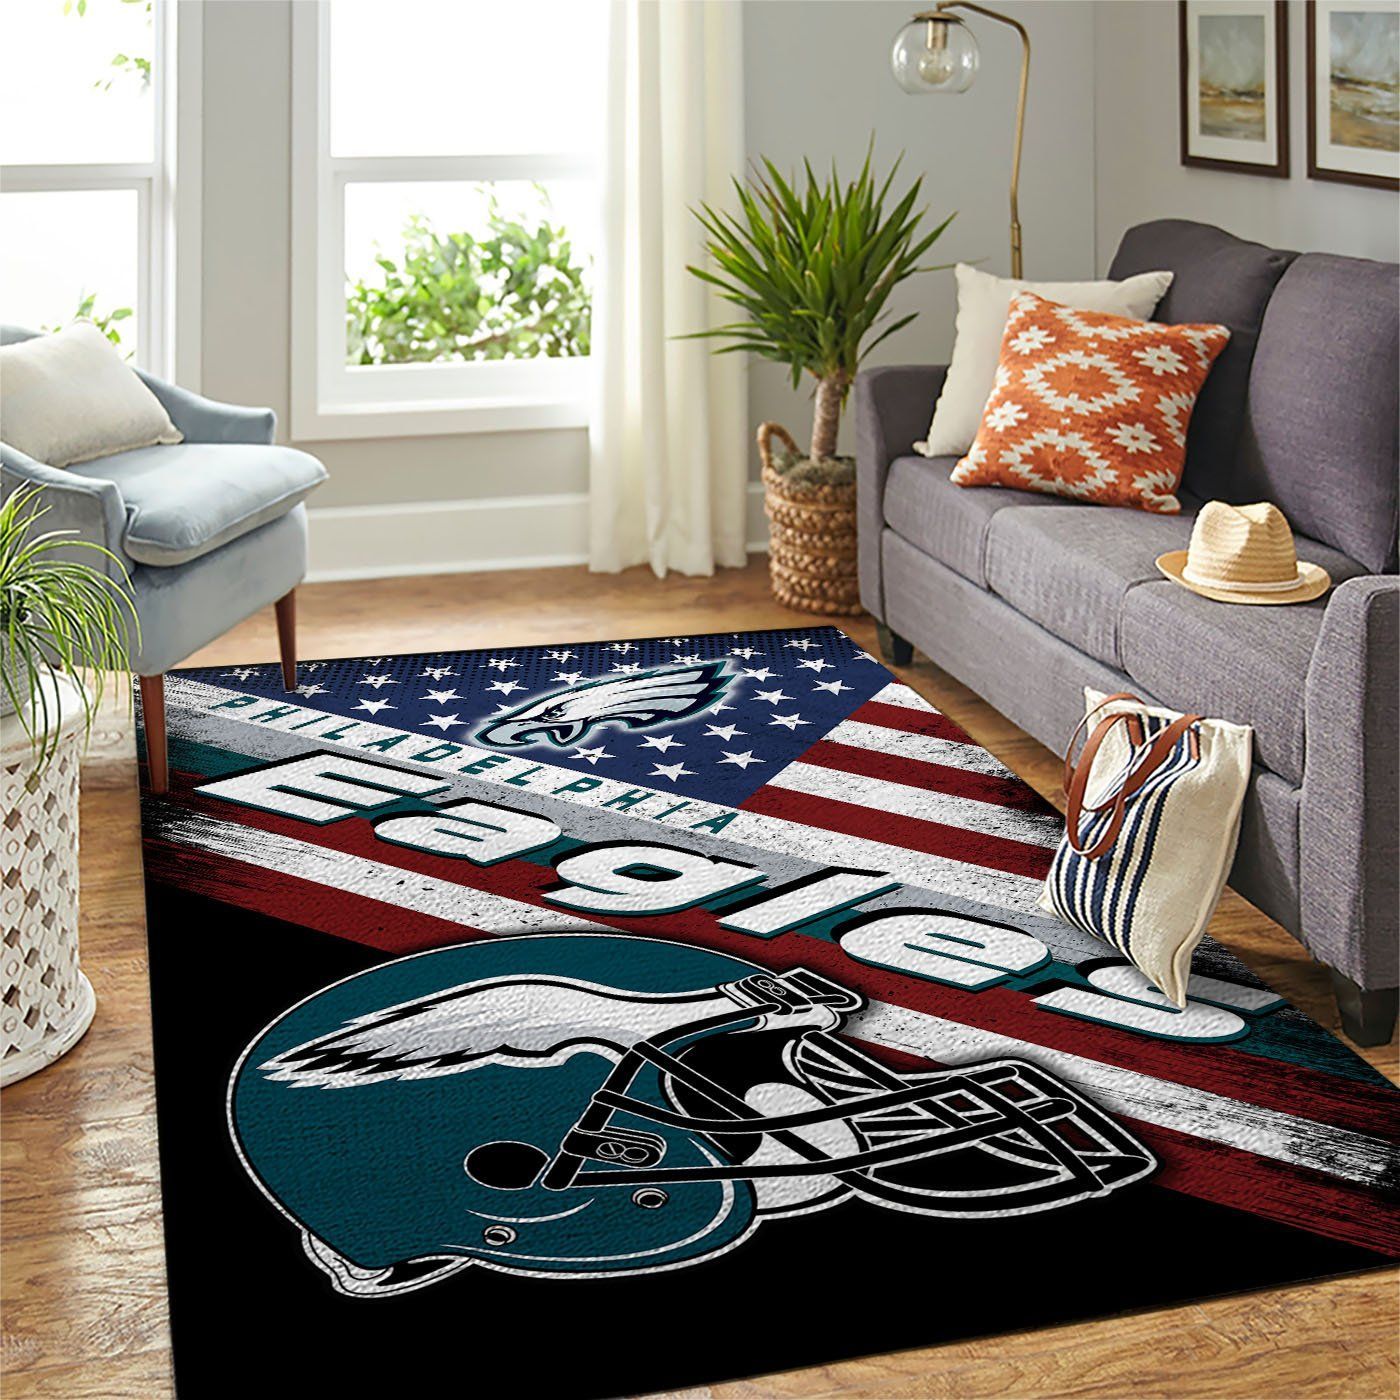 Philadelphia Eagles Nfl Team Logo American football Style Floor home decoration carpet rug